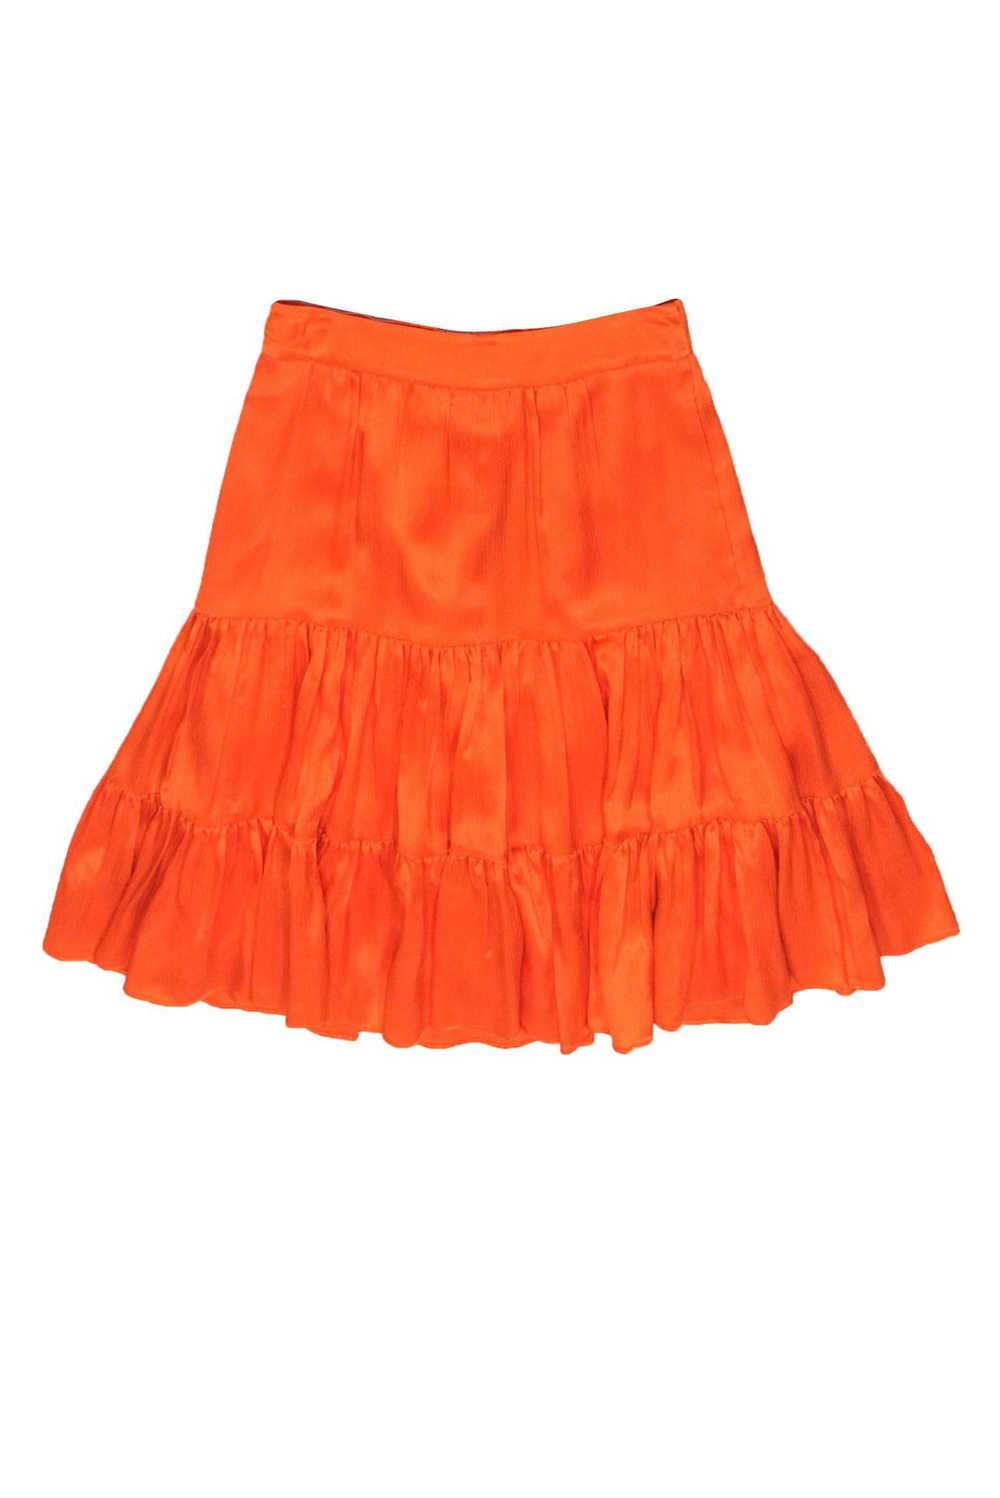 Lilly Pulitzer - Neon Orange Silk Satin A-Line Ti… - image 1